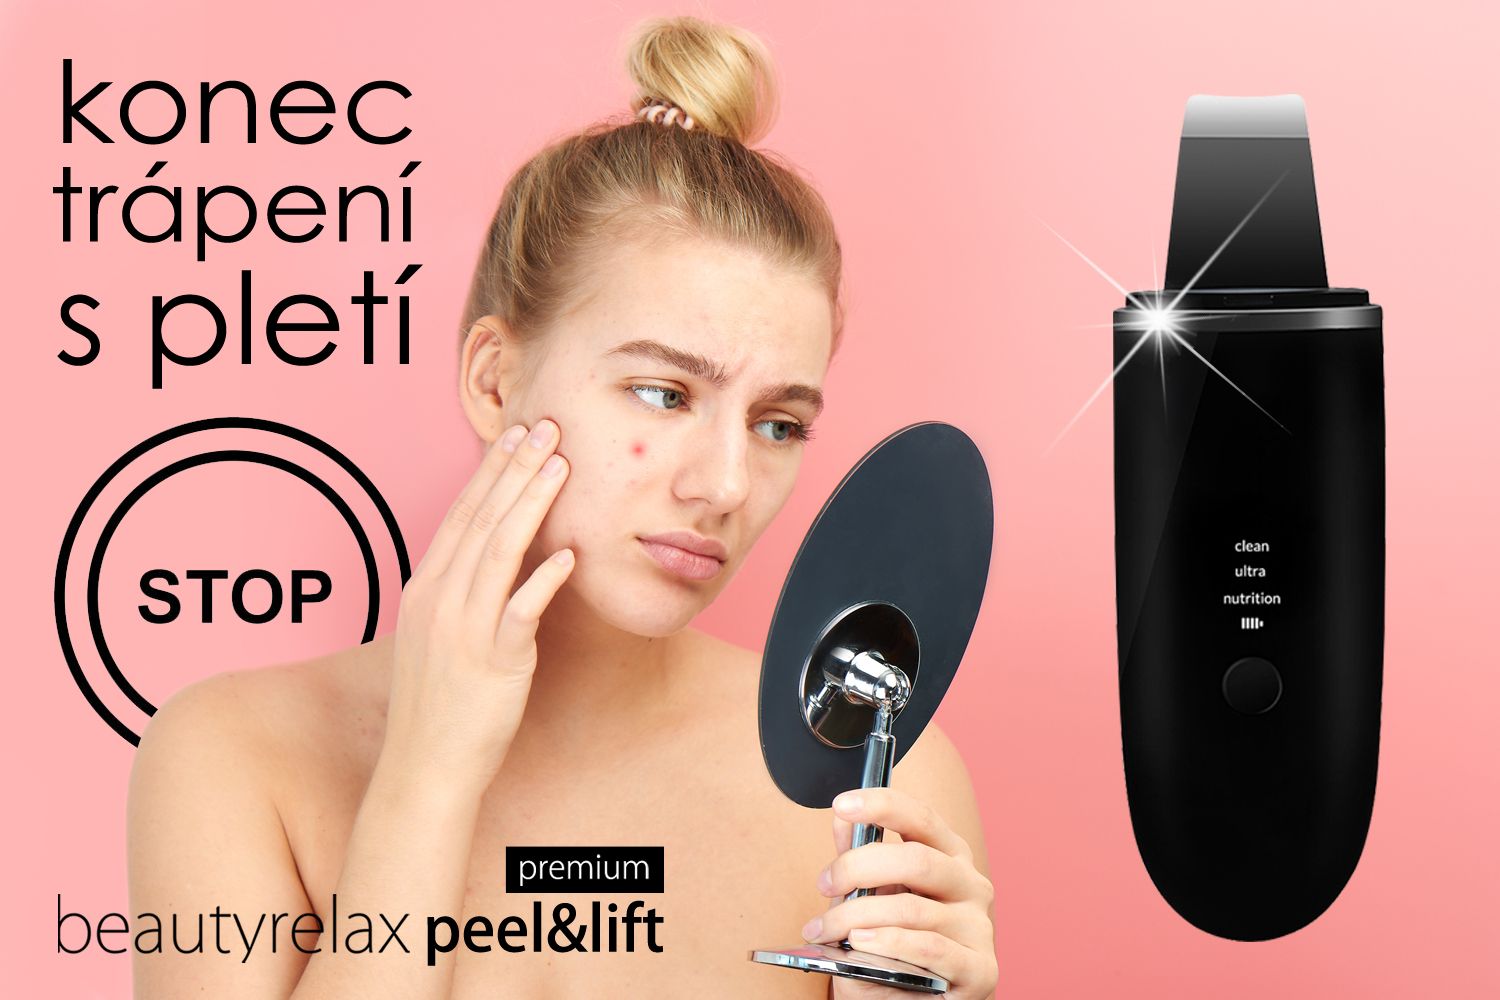 BeautyRelax Peel&lift Premium